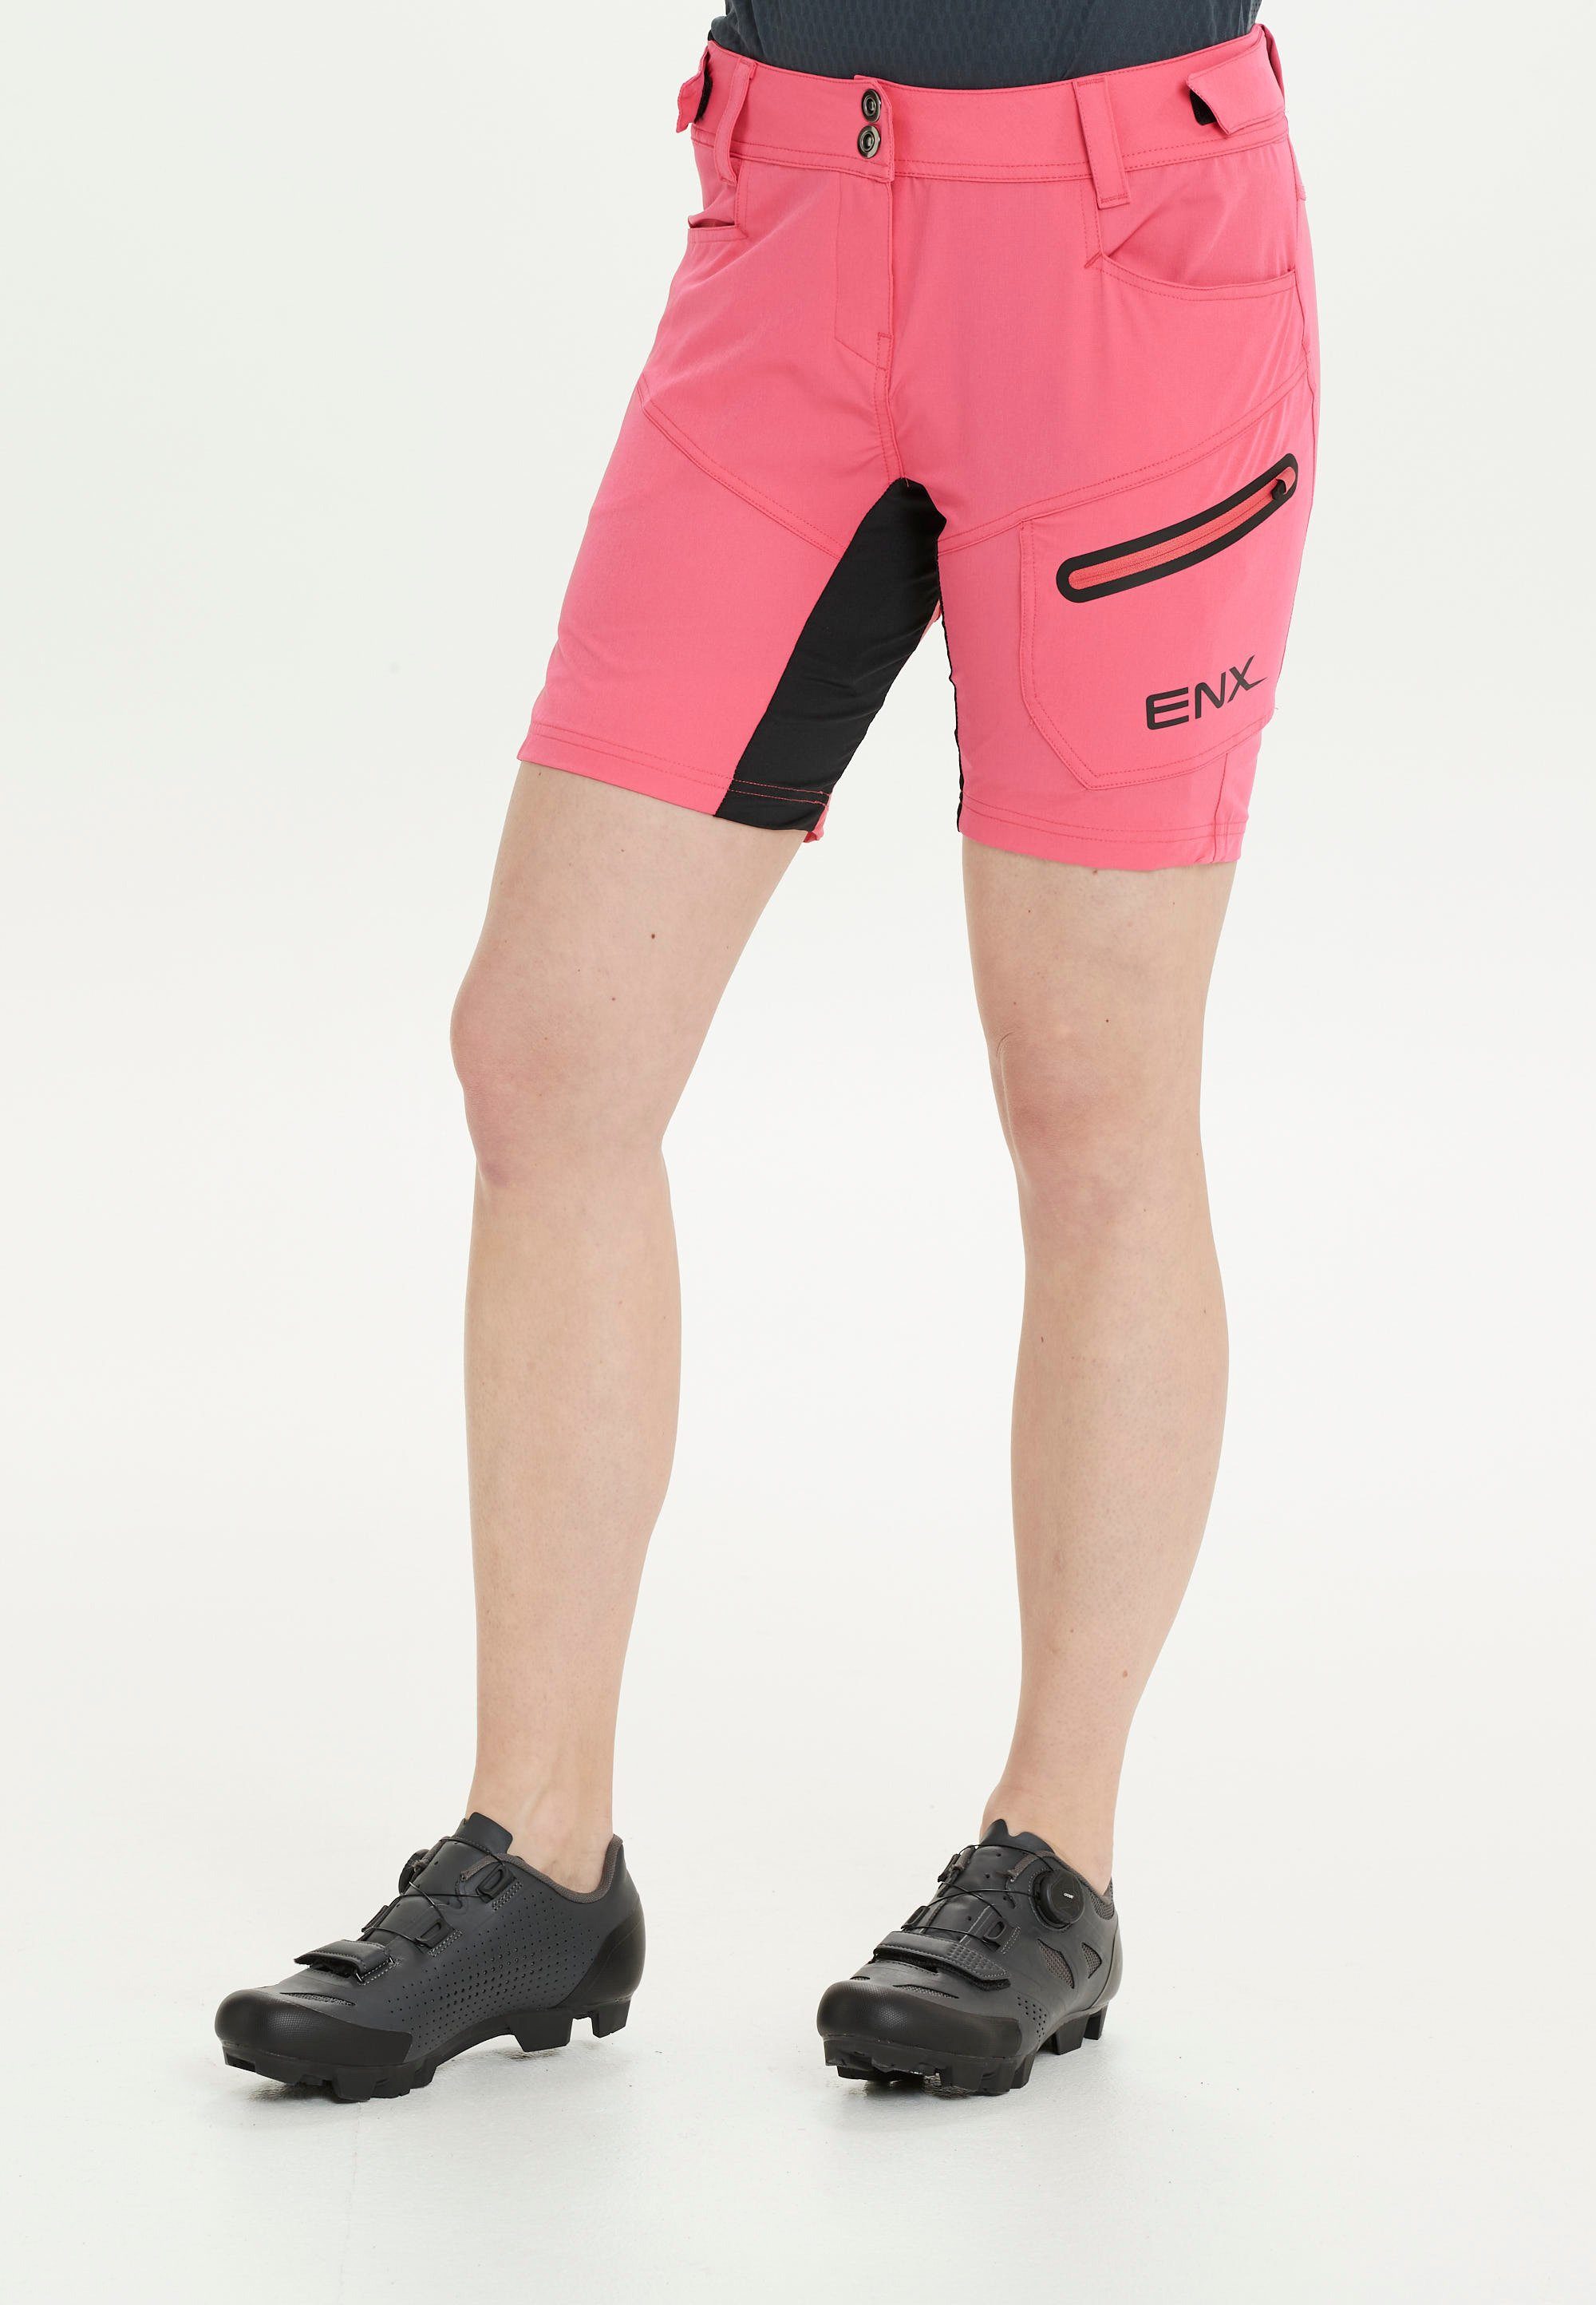 ENDURANCE Radhose Jamilla W 2 in 1 Shorts mit herausnehmbarer Innen-Tights rosa